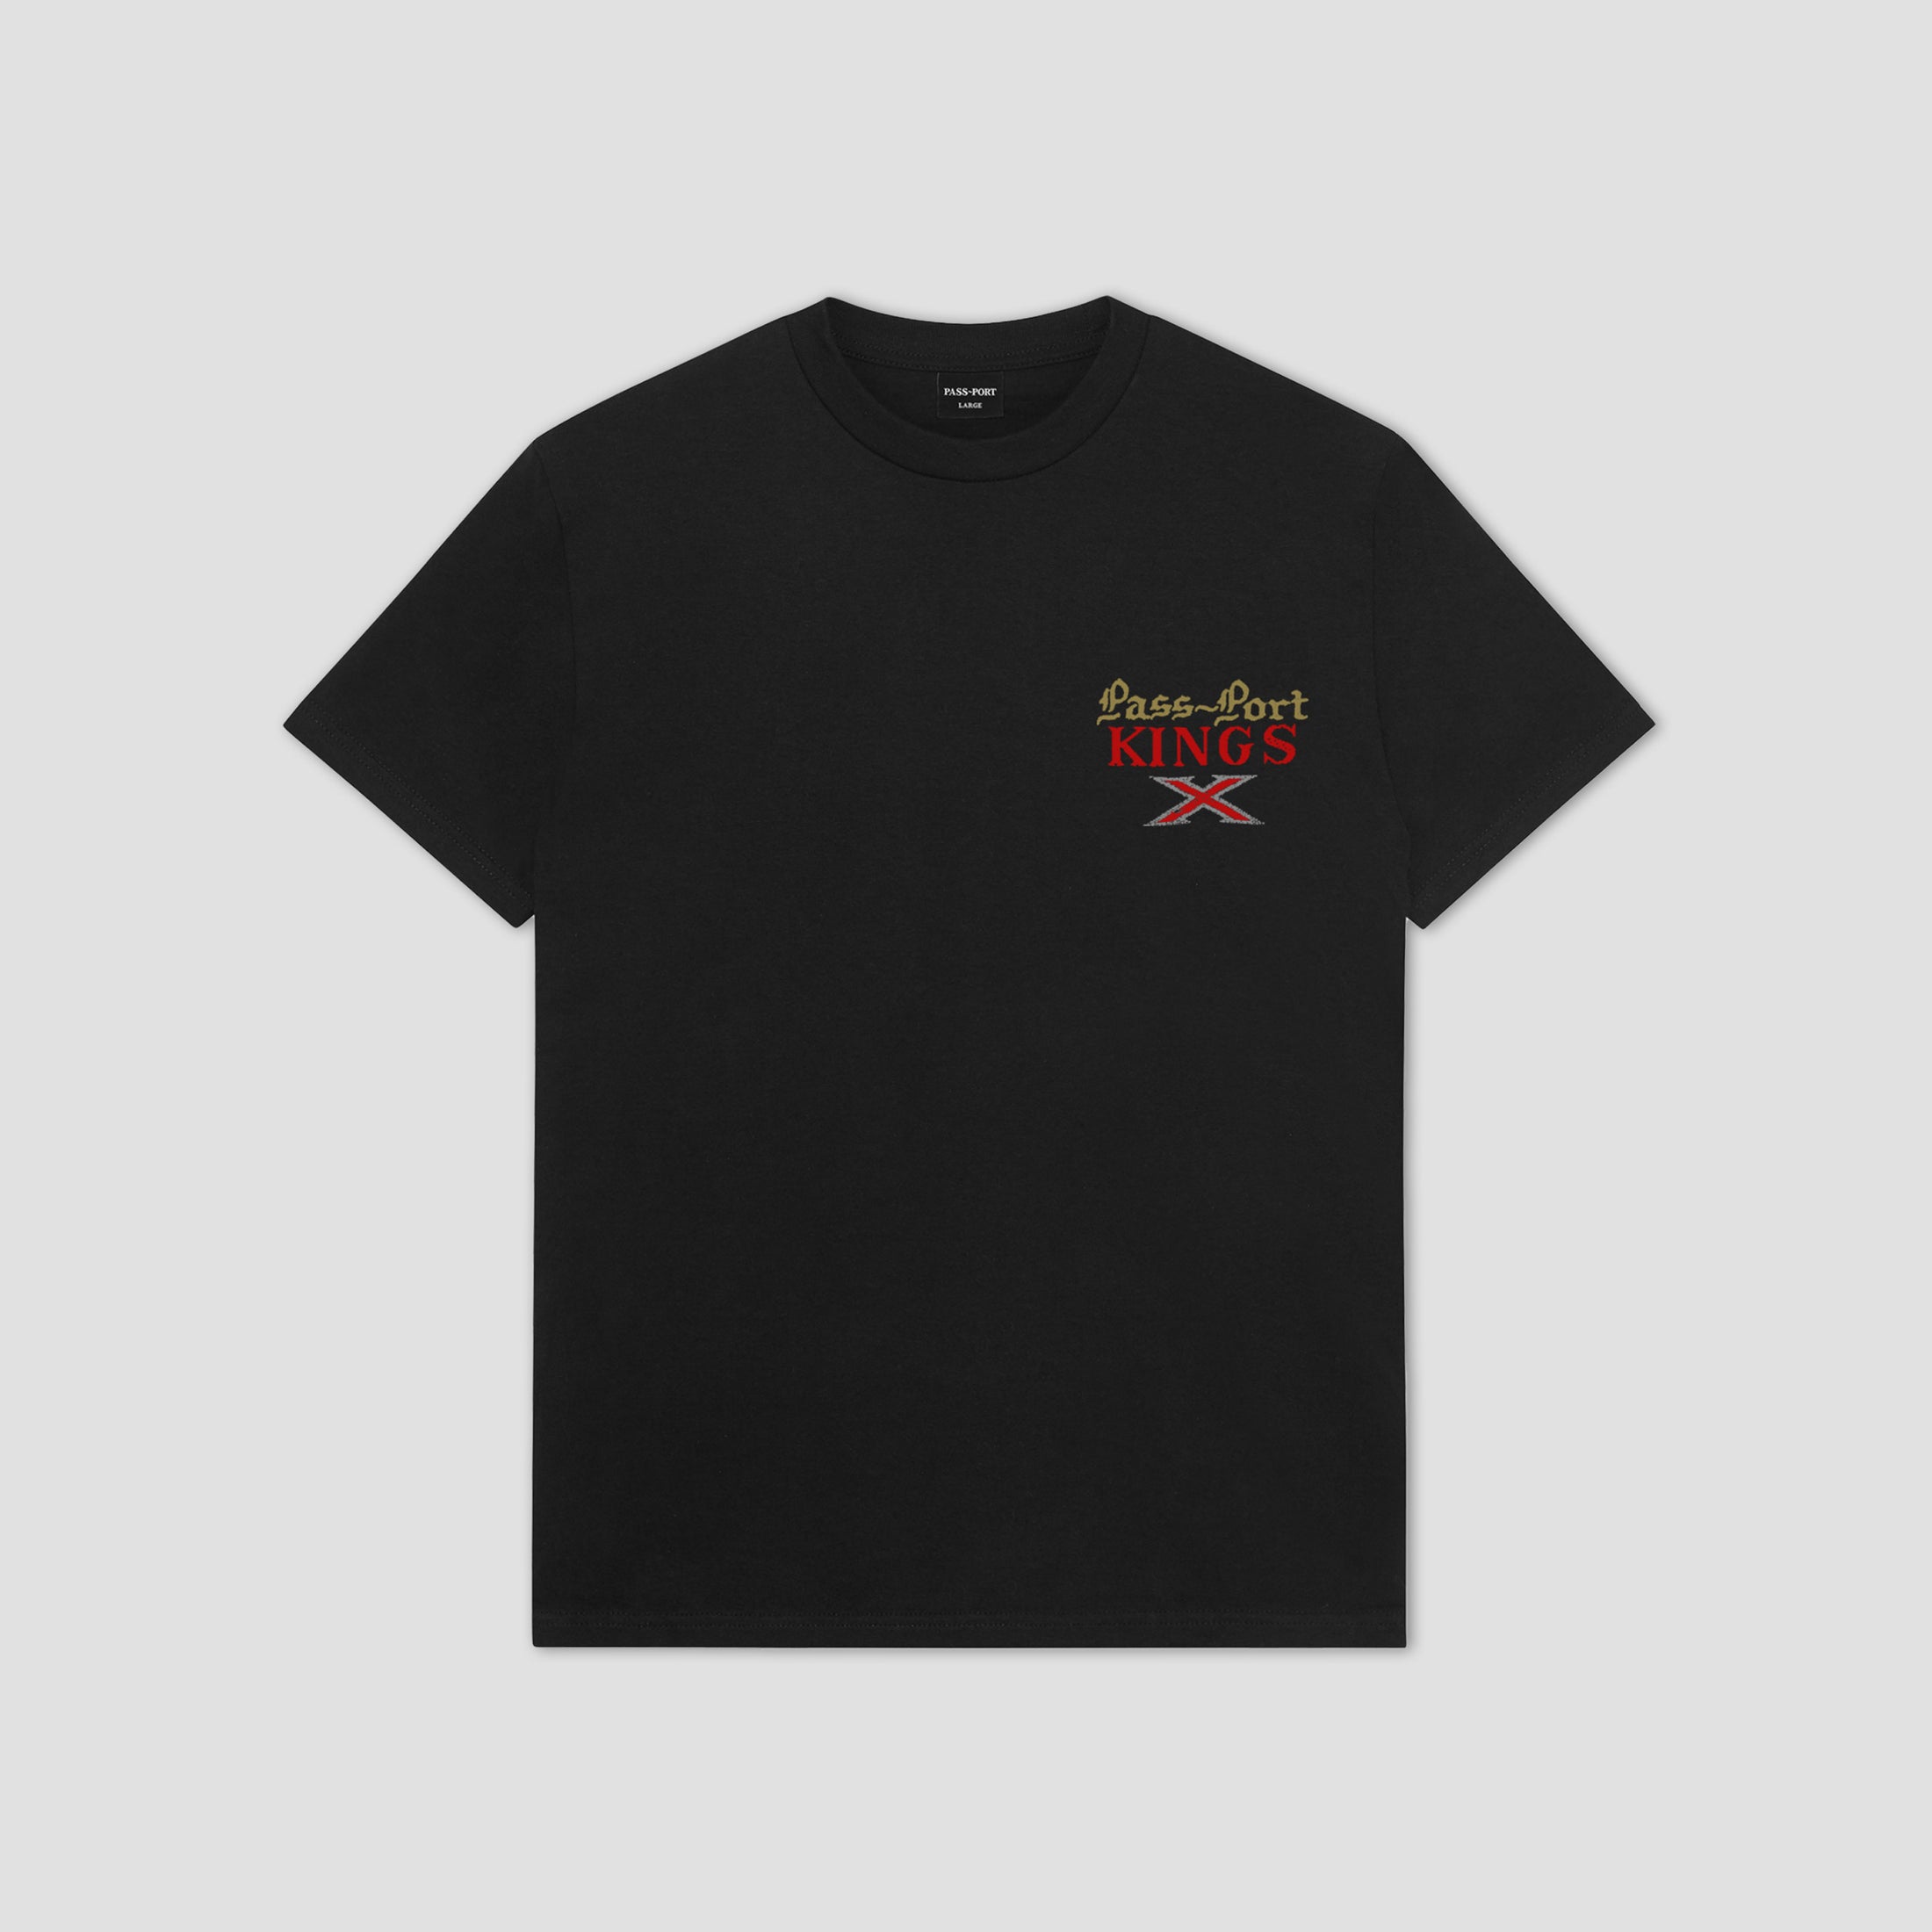 PassPort Kings X T-Shirt Black